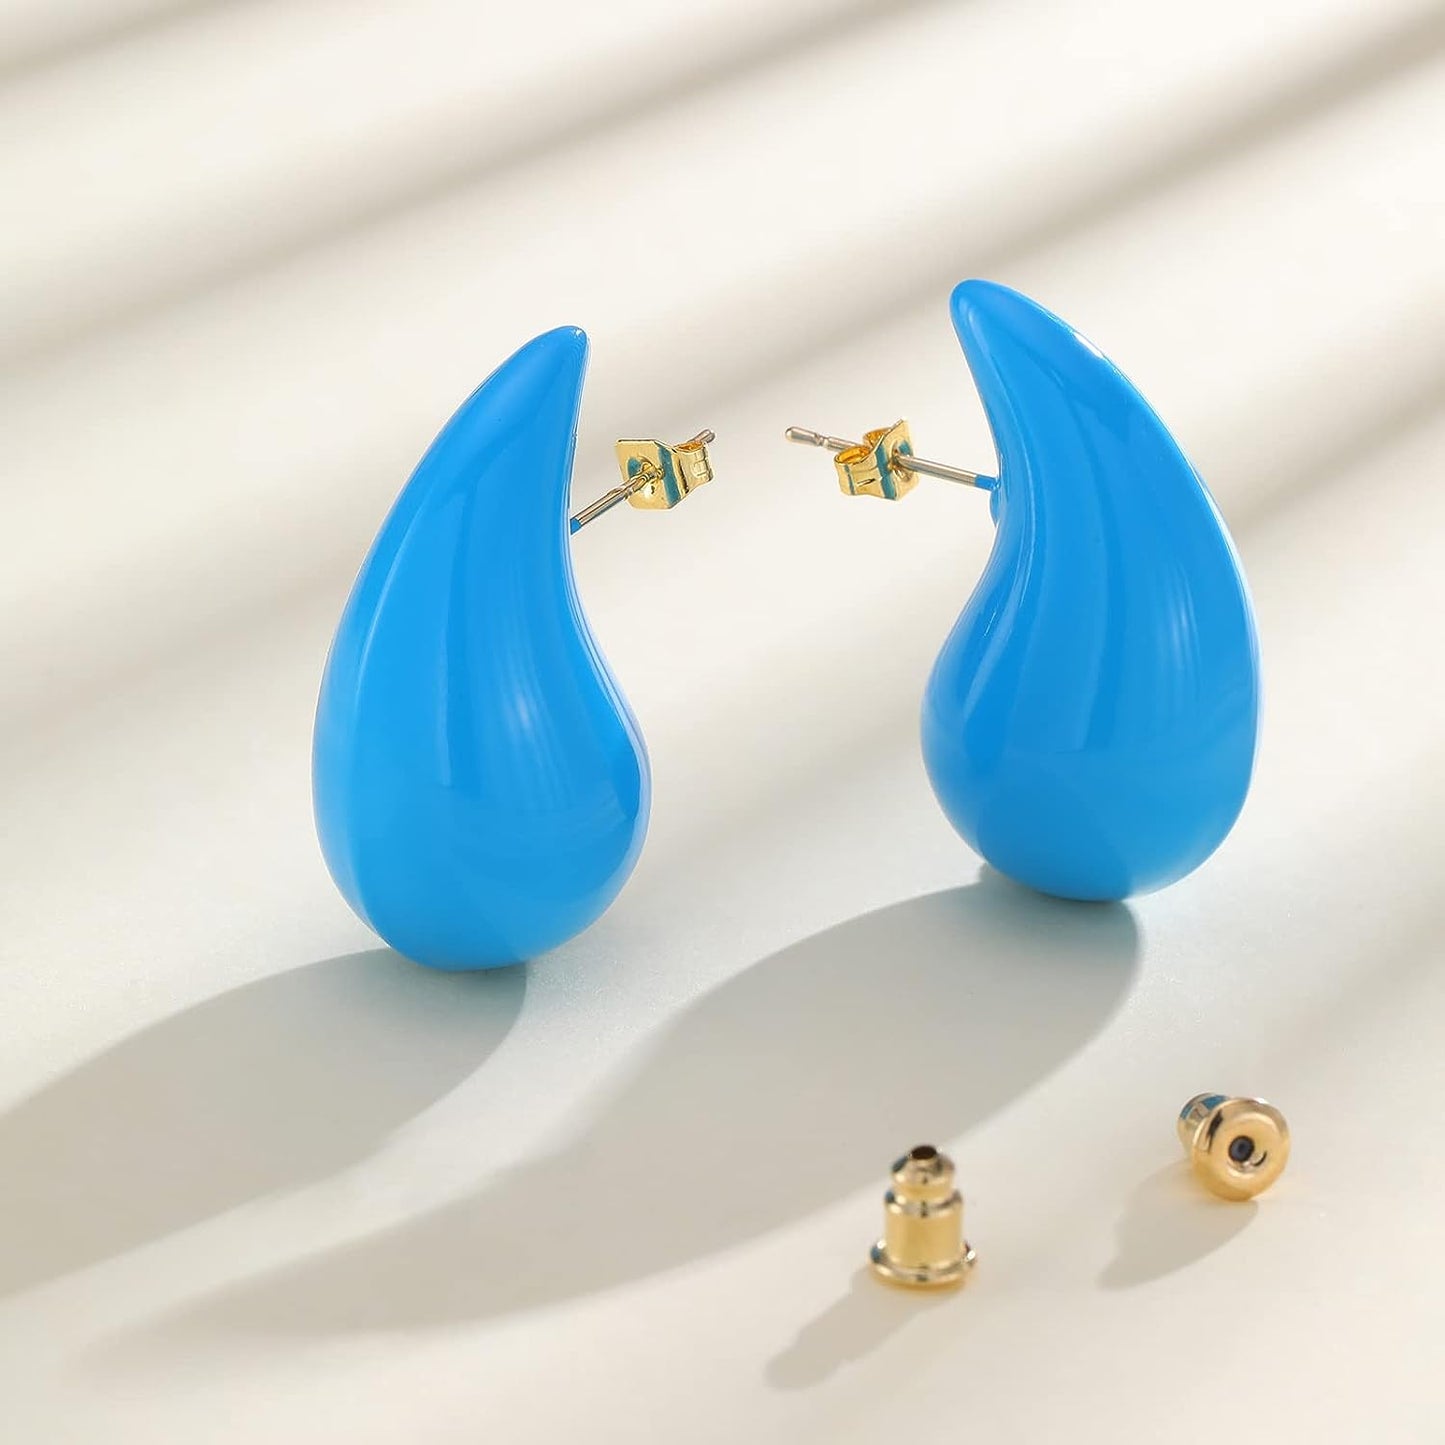 Chunky Gold Earrings for Women, Dupes Earrings Lightweight Waterdrop Hollow Open Hoops, Hypoallergenic Gold Plated Earrings Fashion Jewelry for Women Girls